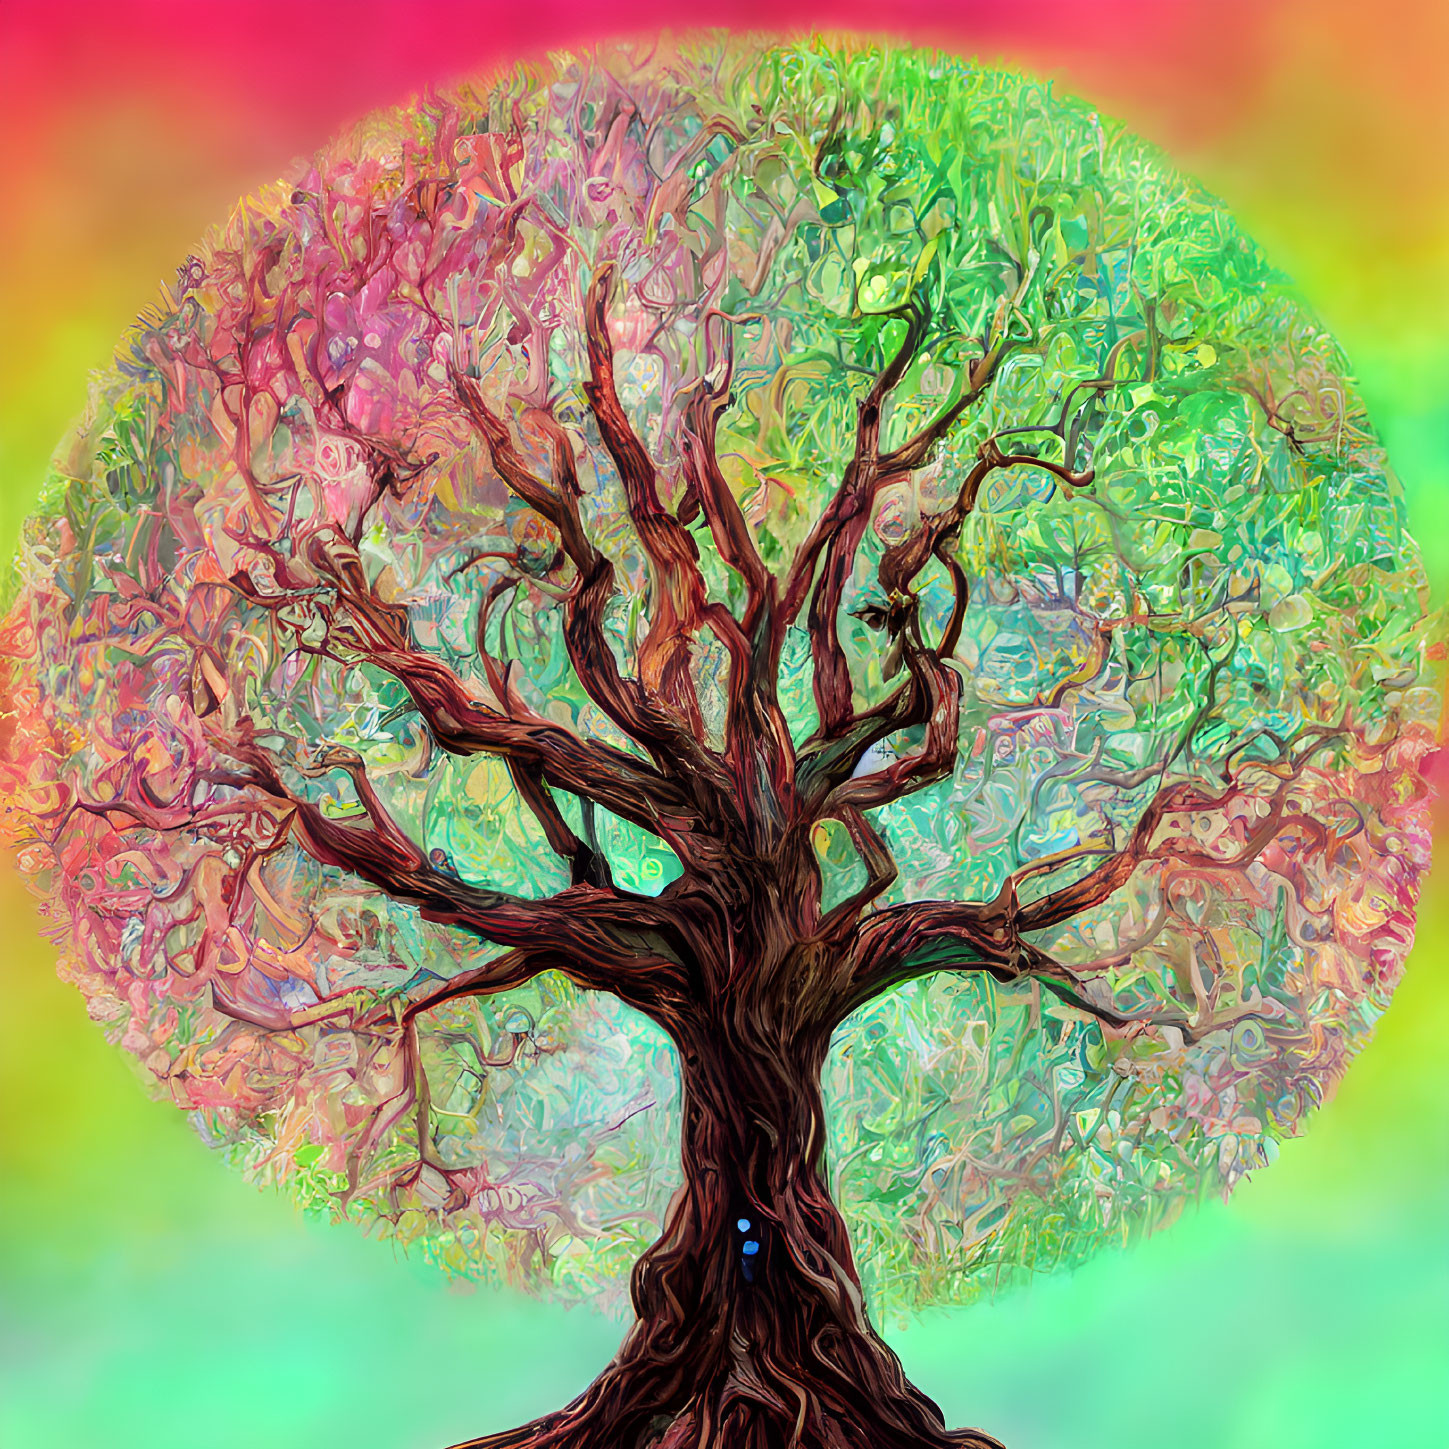 Colorful digital artwork: intricate tree against rainbow backdrop